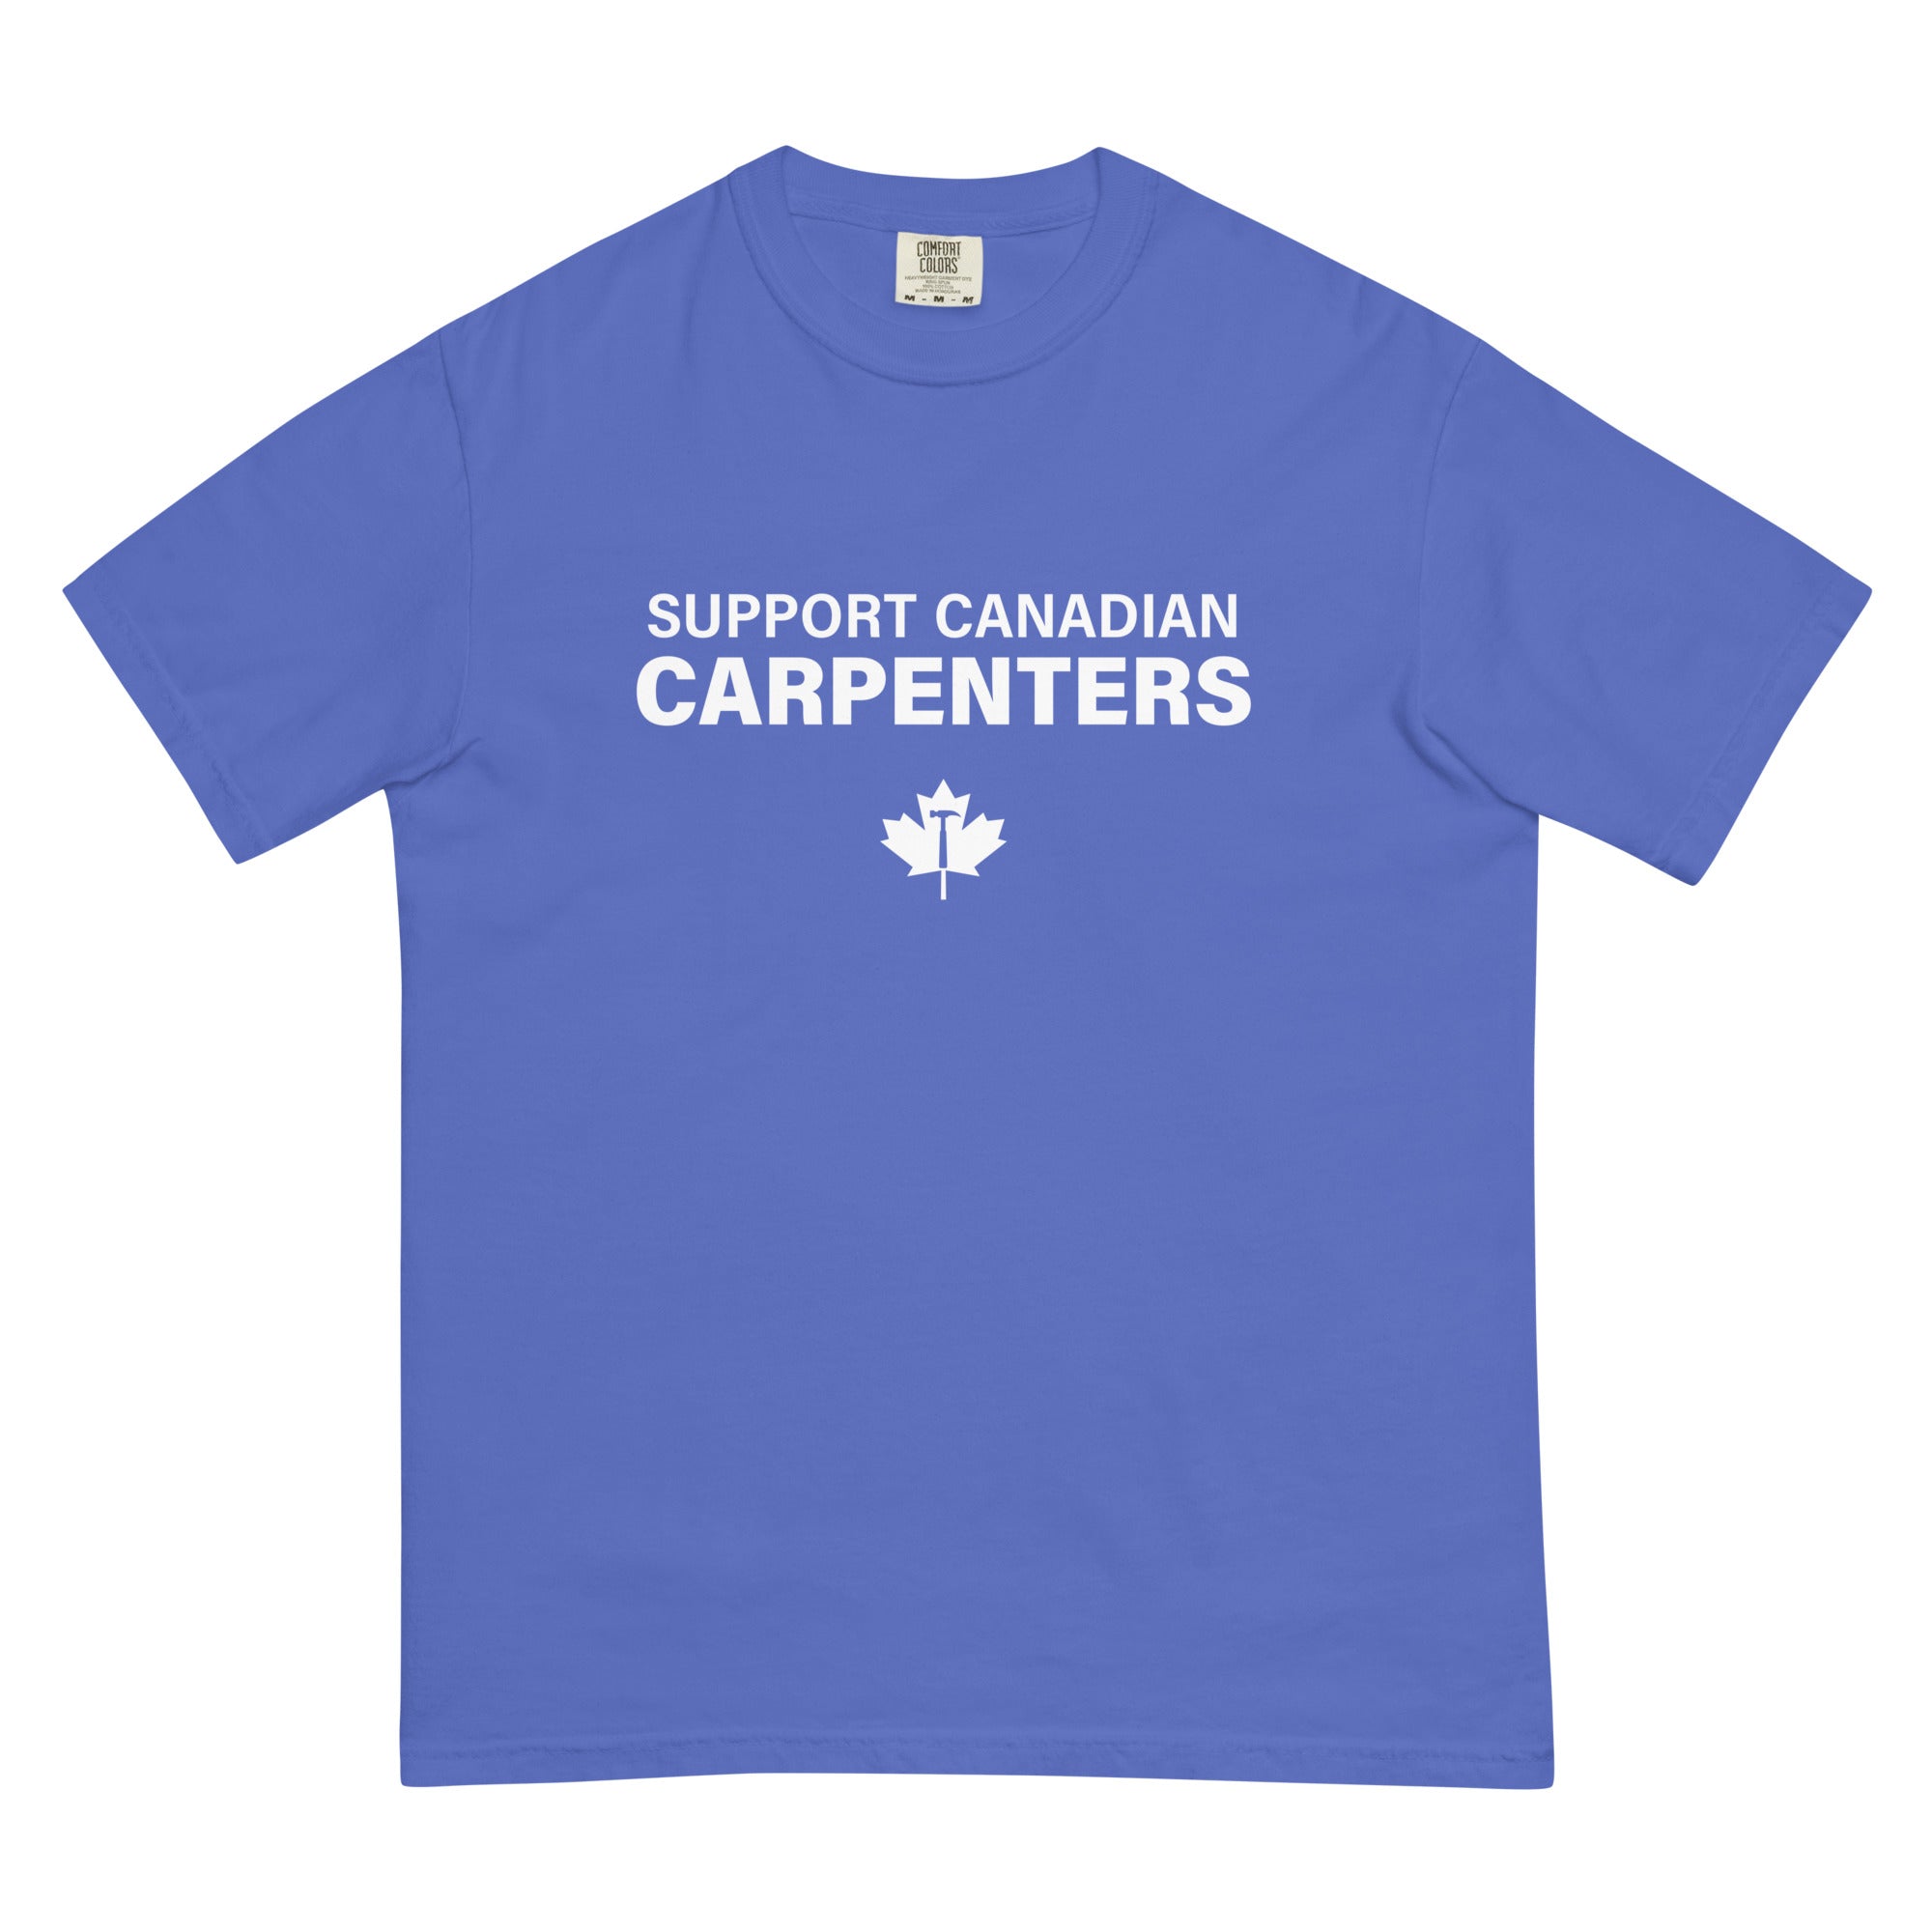 Men's "Support Canadian Carpenters" T-shirt